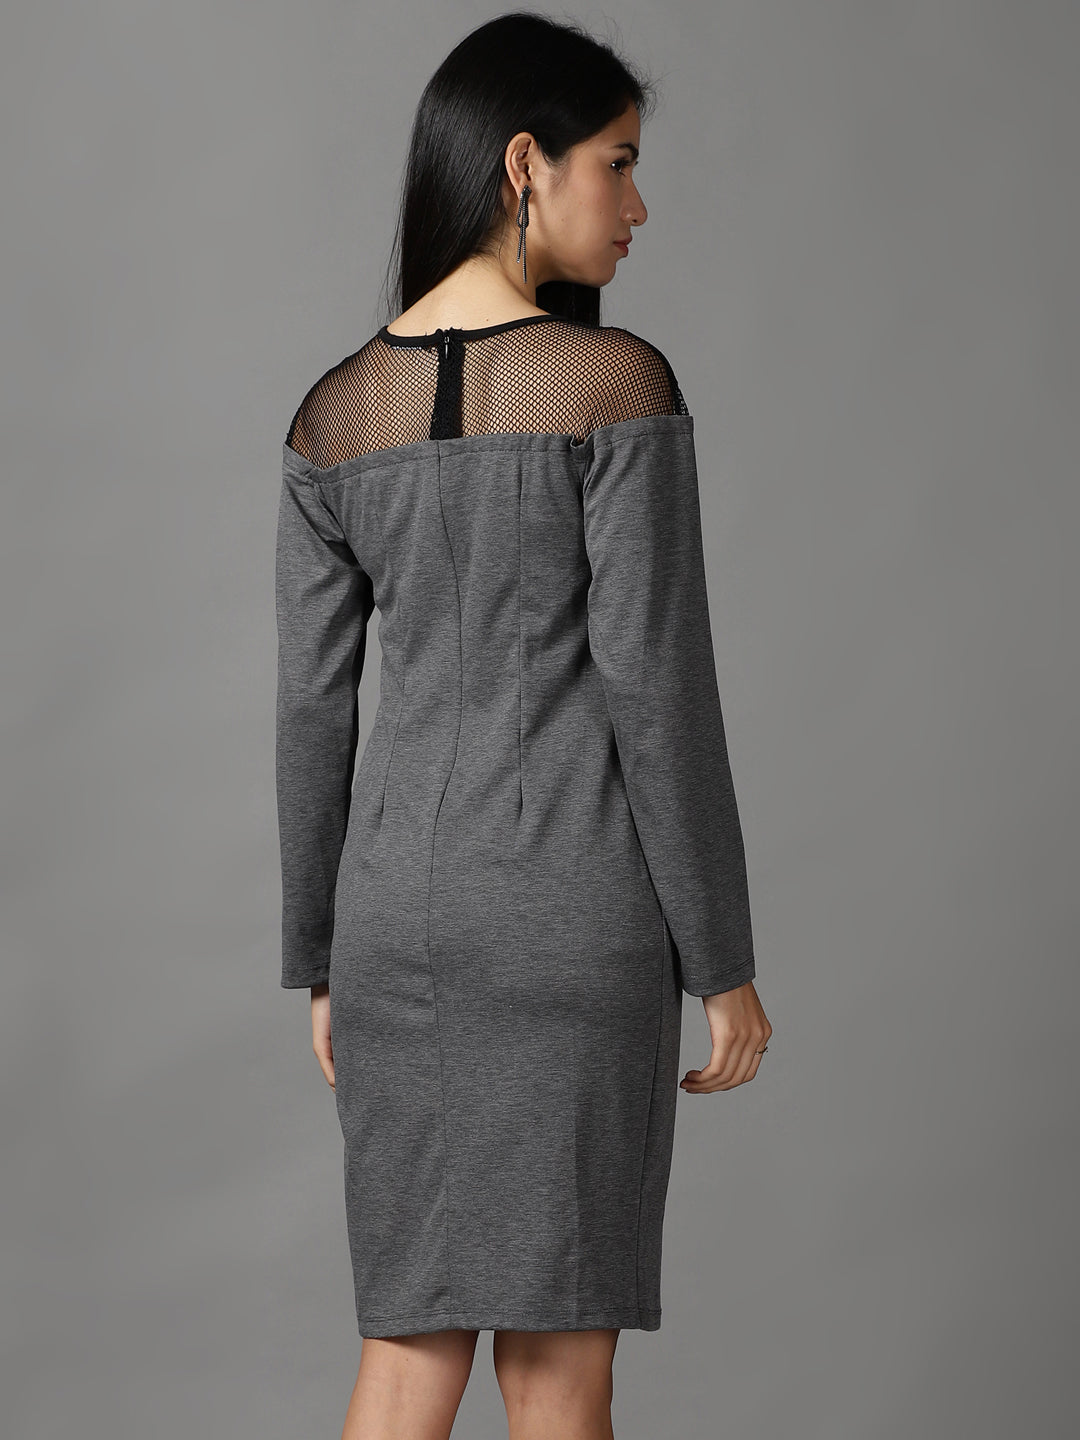 Women's Grey Solid Bodycon Dress